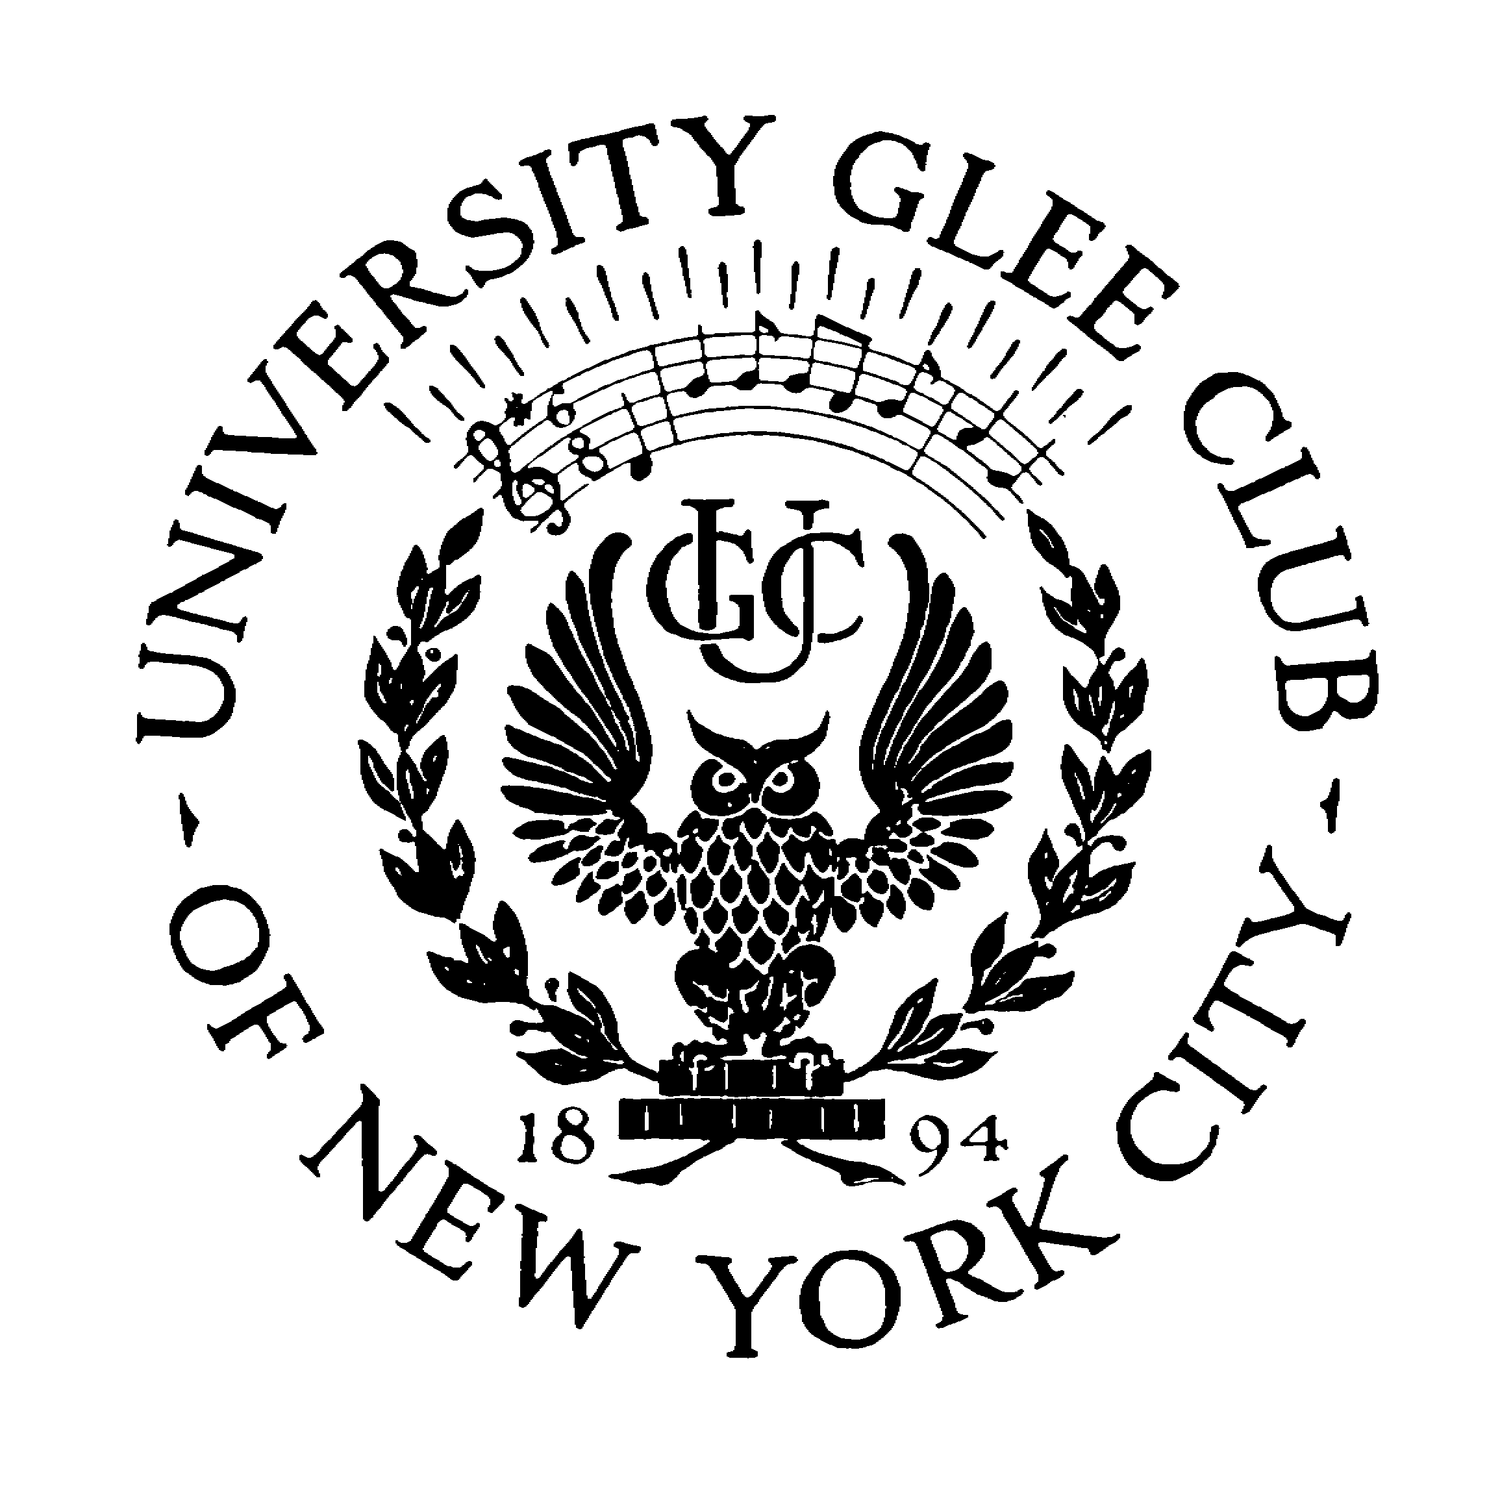 University Glee Club of NYC